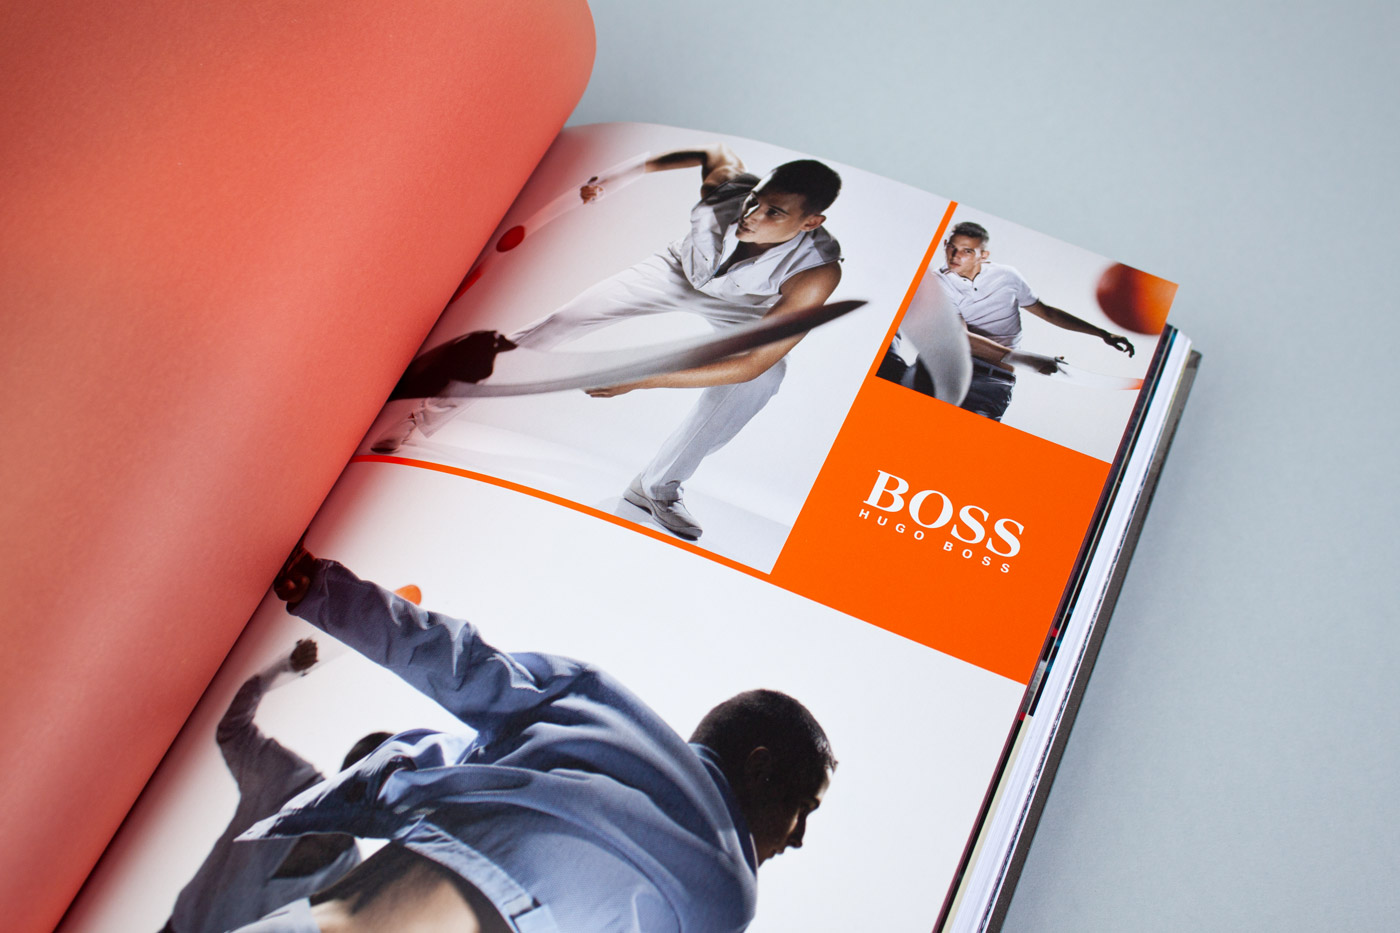 Hugo Boss Annual Report